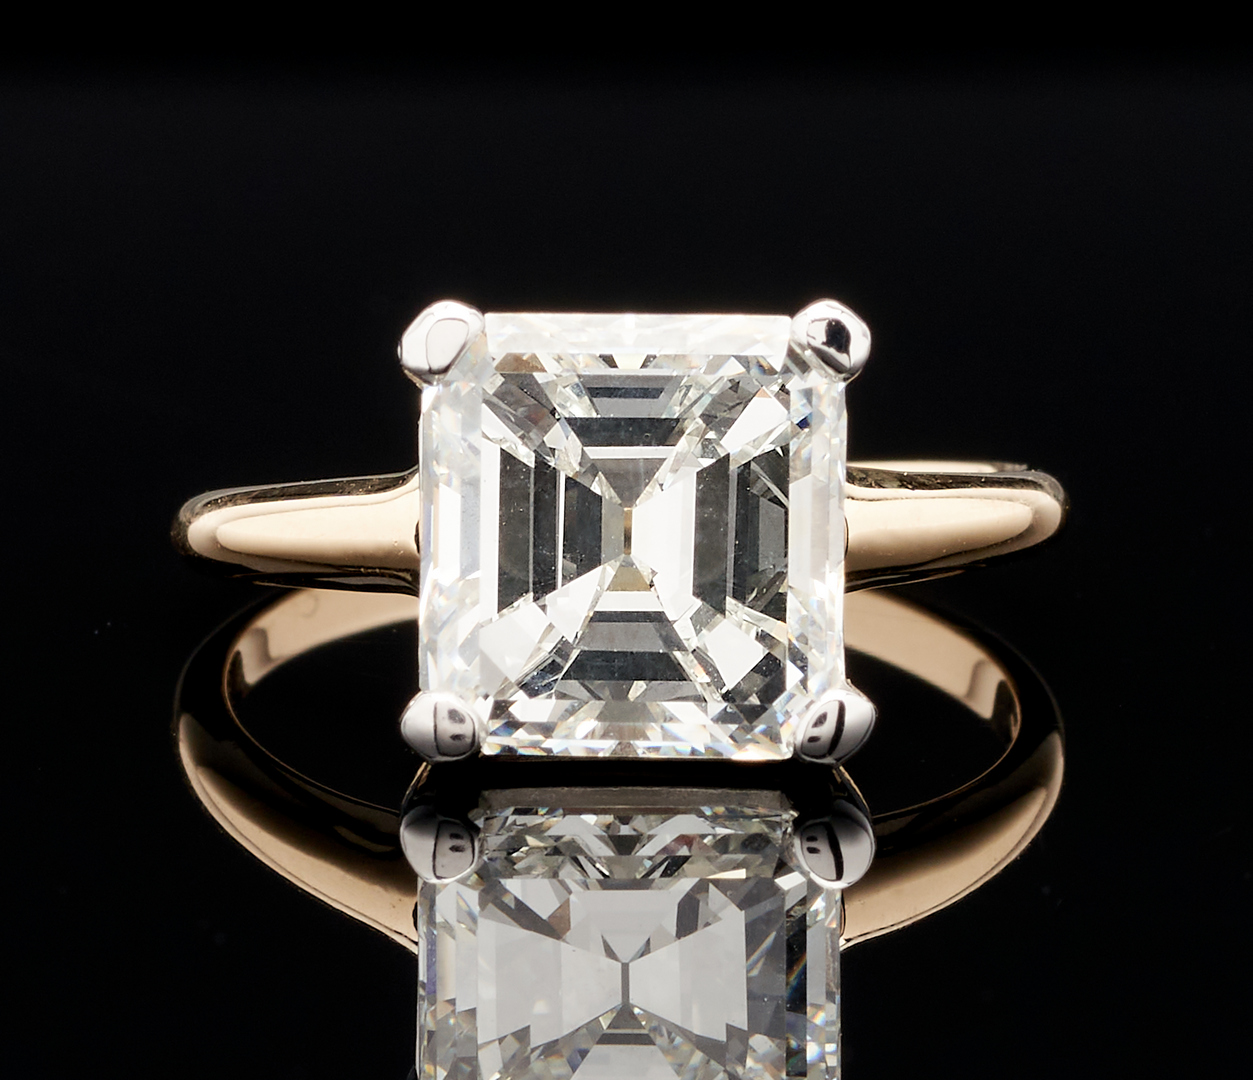 Lot 57: Ladies 4.01 Carat 14K Emerald Cut Diamond Solitaire Ring, GIA Report